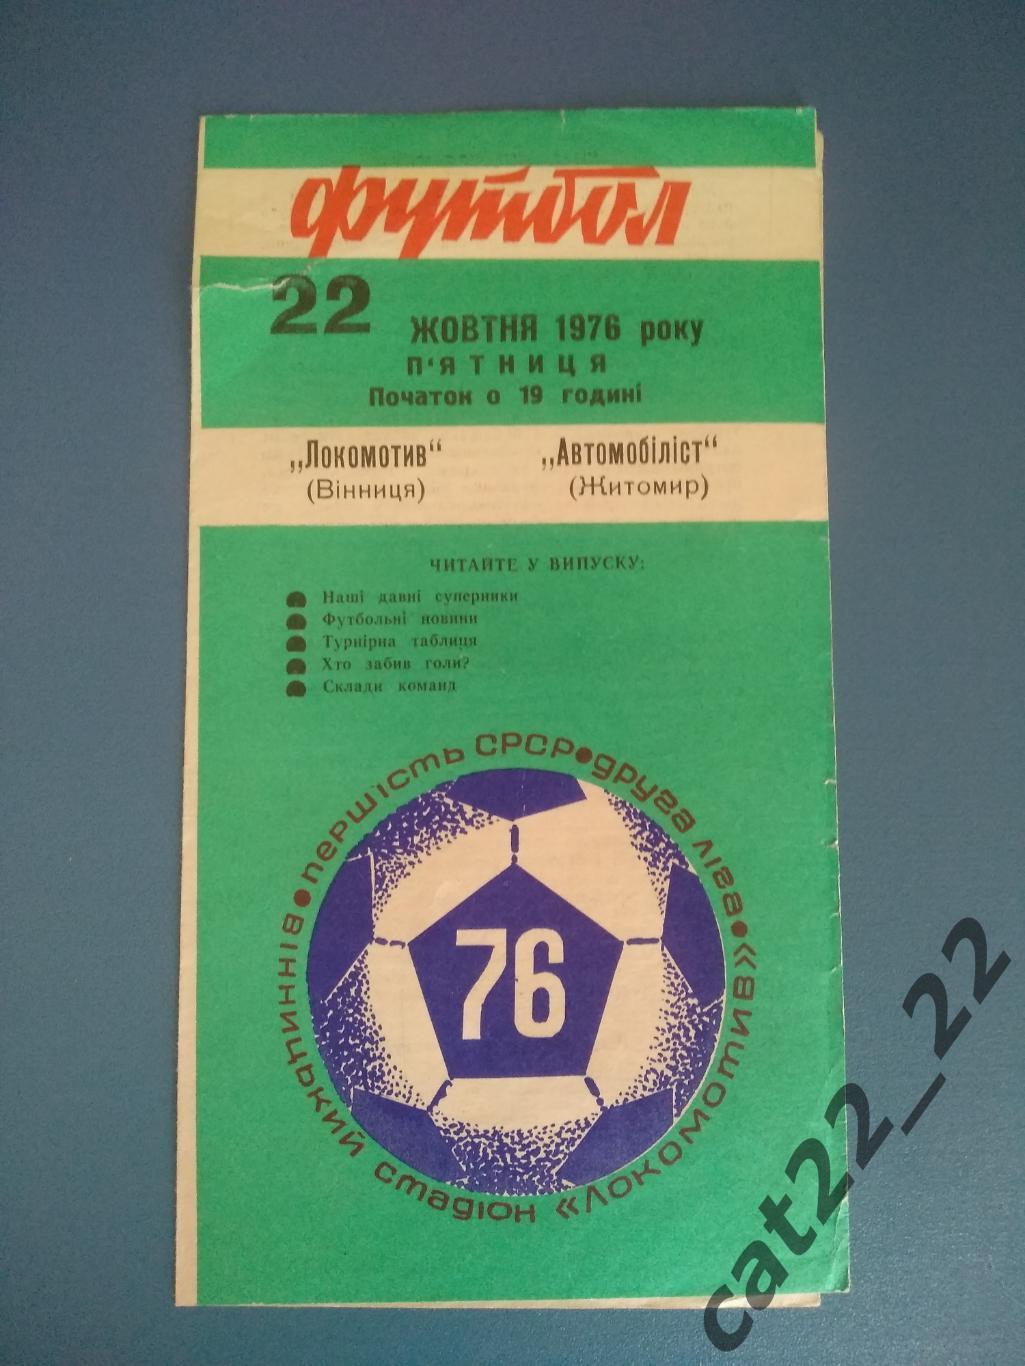 Локомотив Винница - Автомобилист Житомир 1976